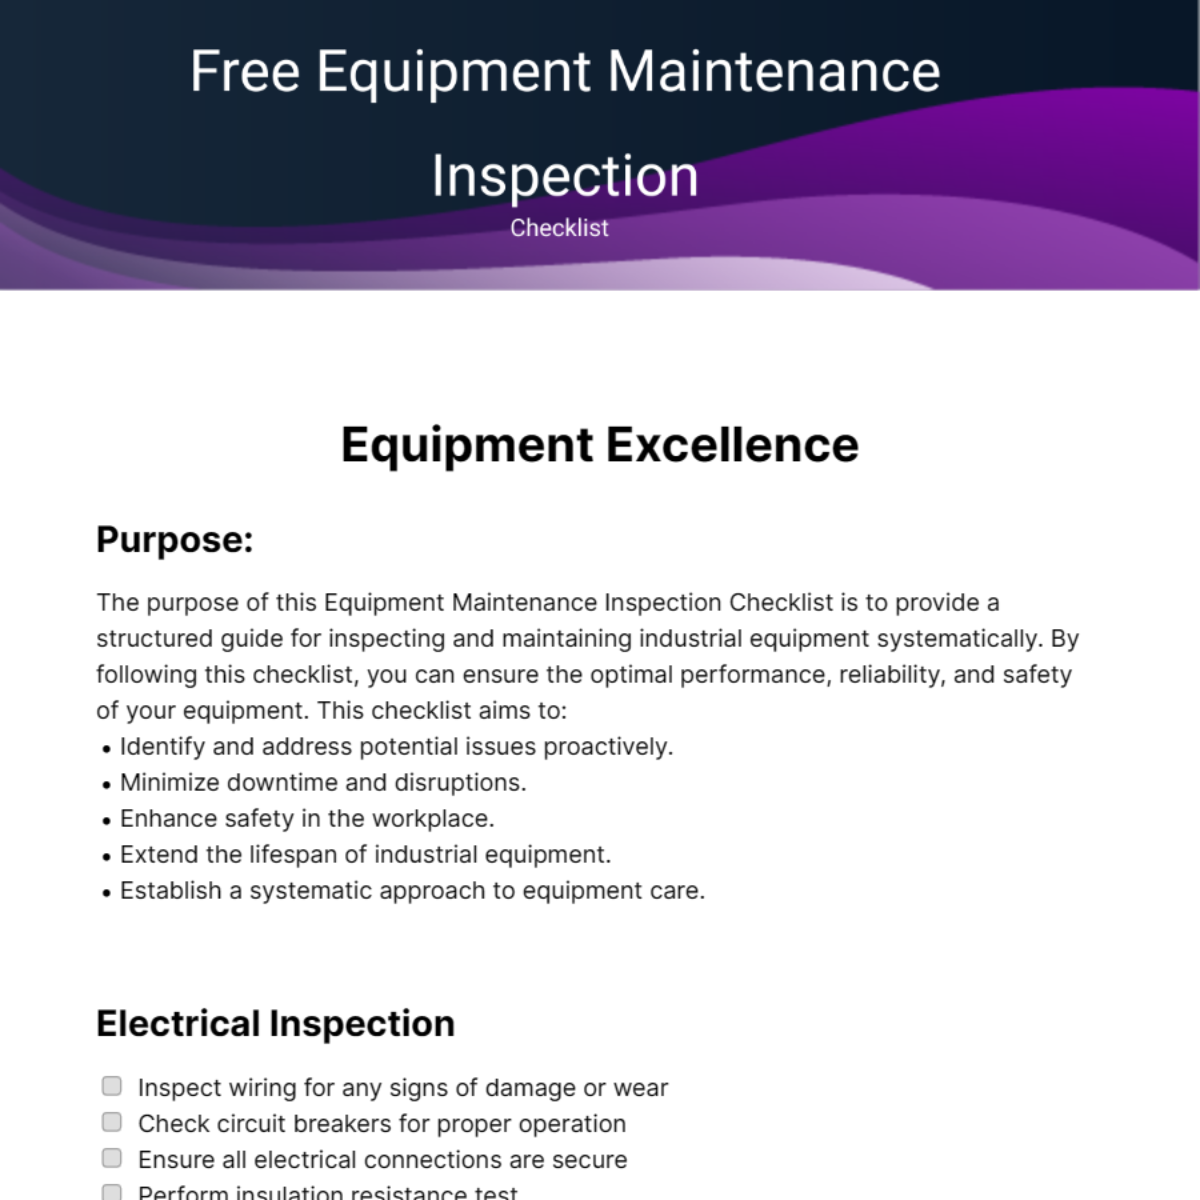 Free Equipment Maintenance Inspection Checklist Template